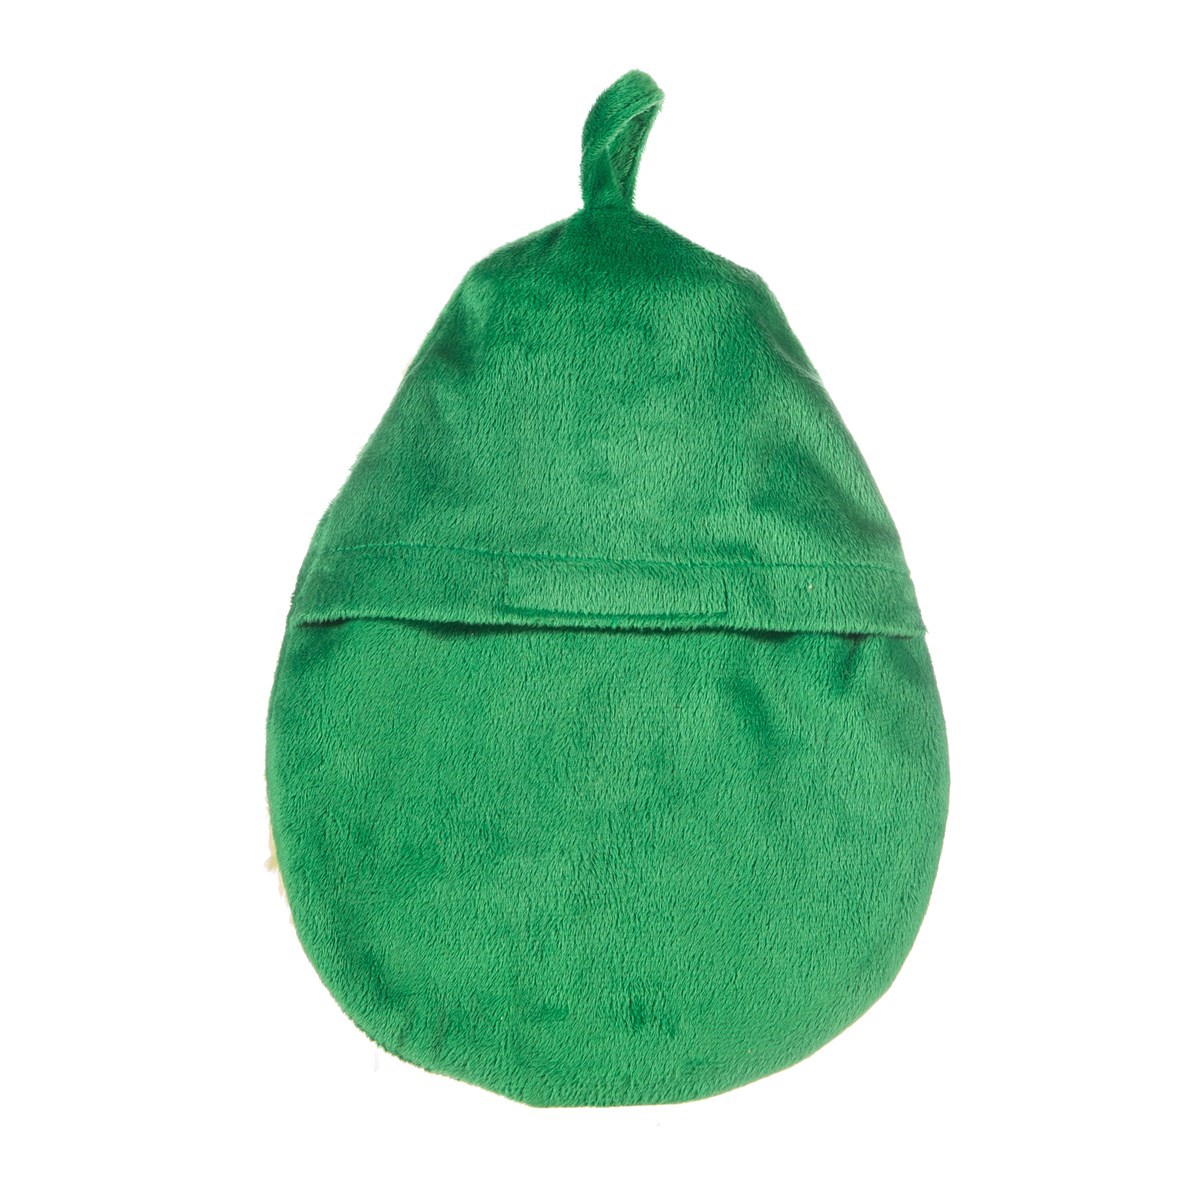 Avocuddle Avocado Green Hot Water Bottle